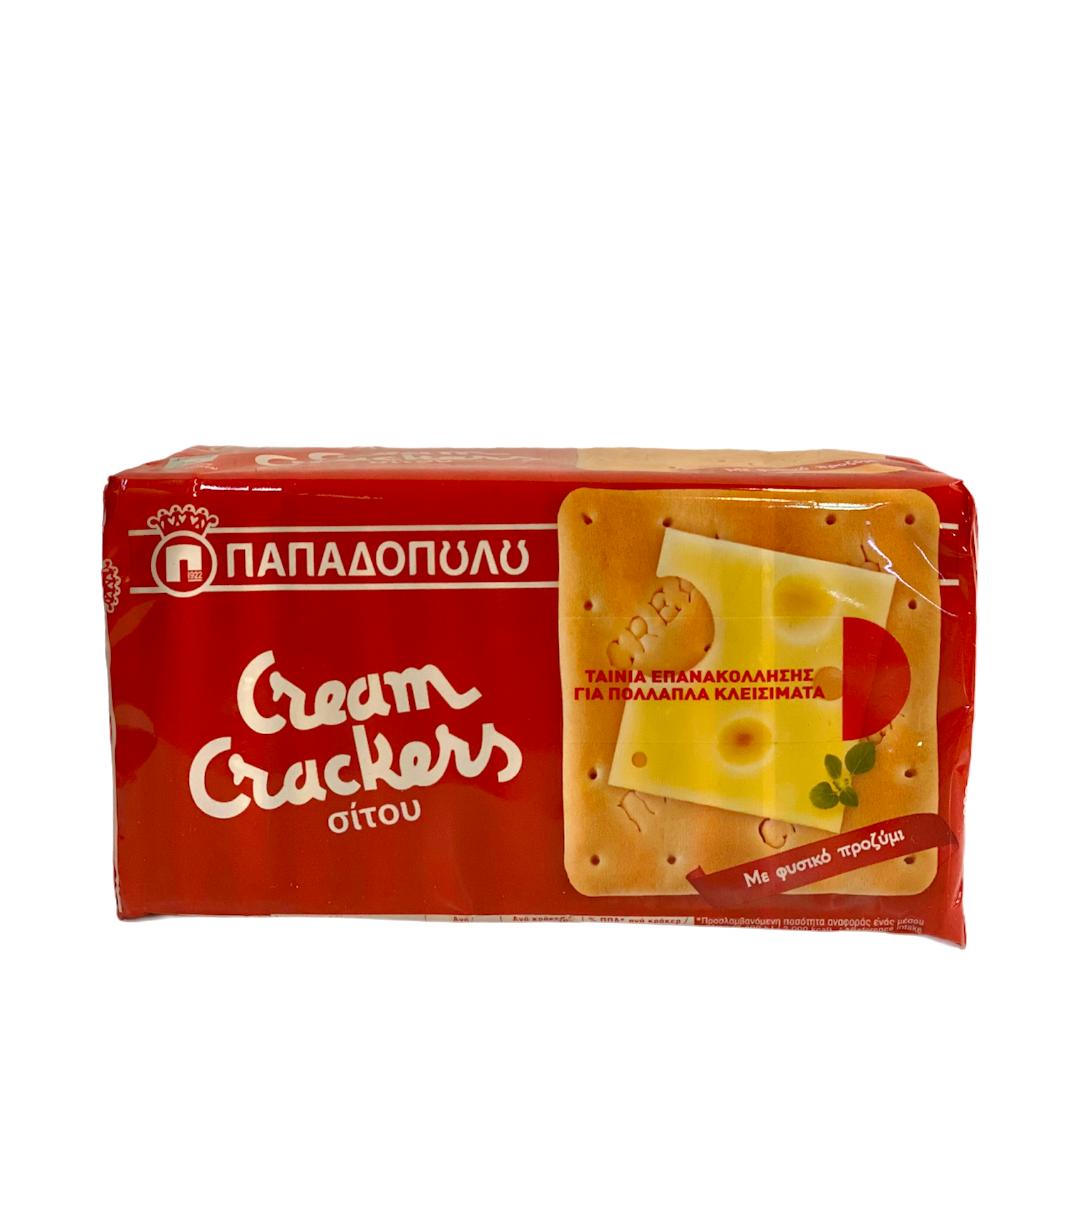 Papadopoulou Cream Cracker Creme Cracker Classic 140g